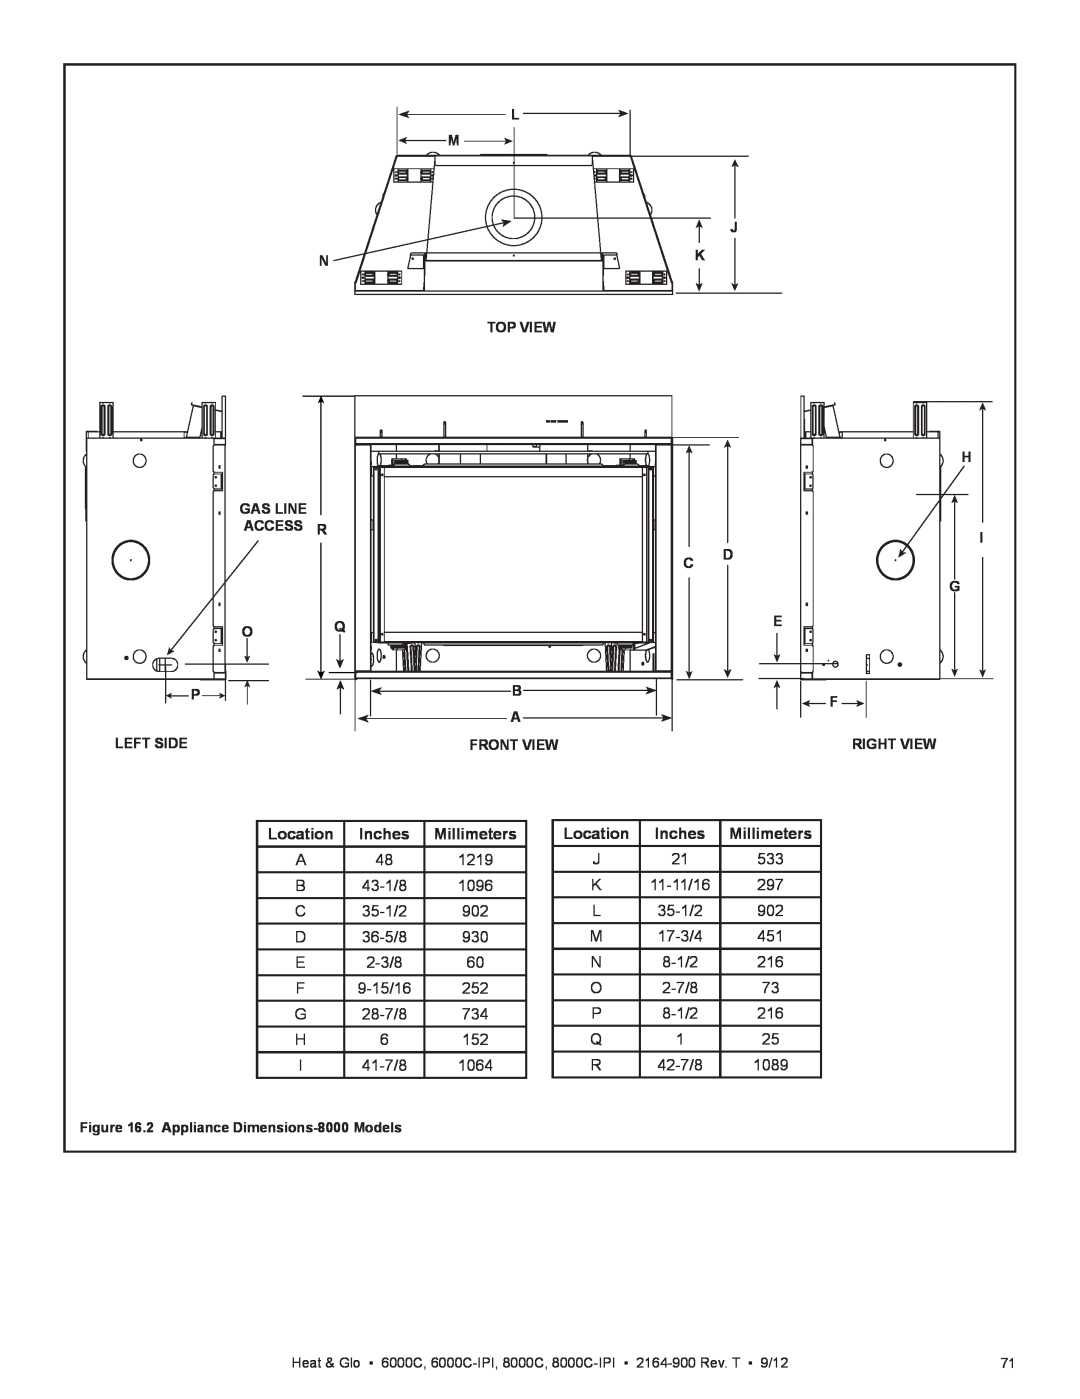 Heat & Glo LifeStyle 6000C manual 2-3/8 